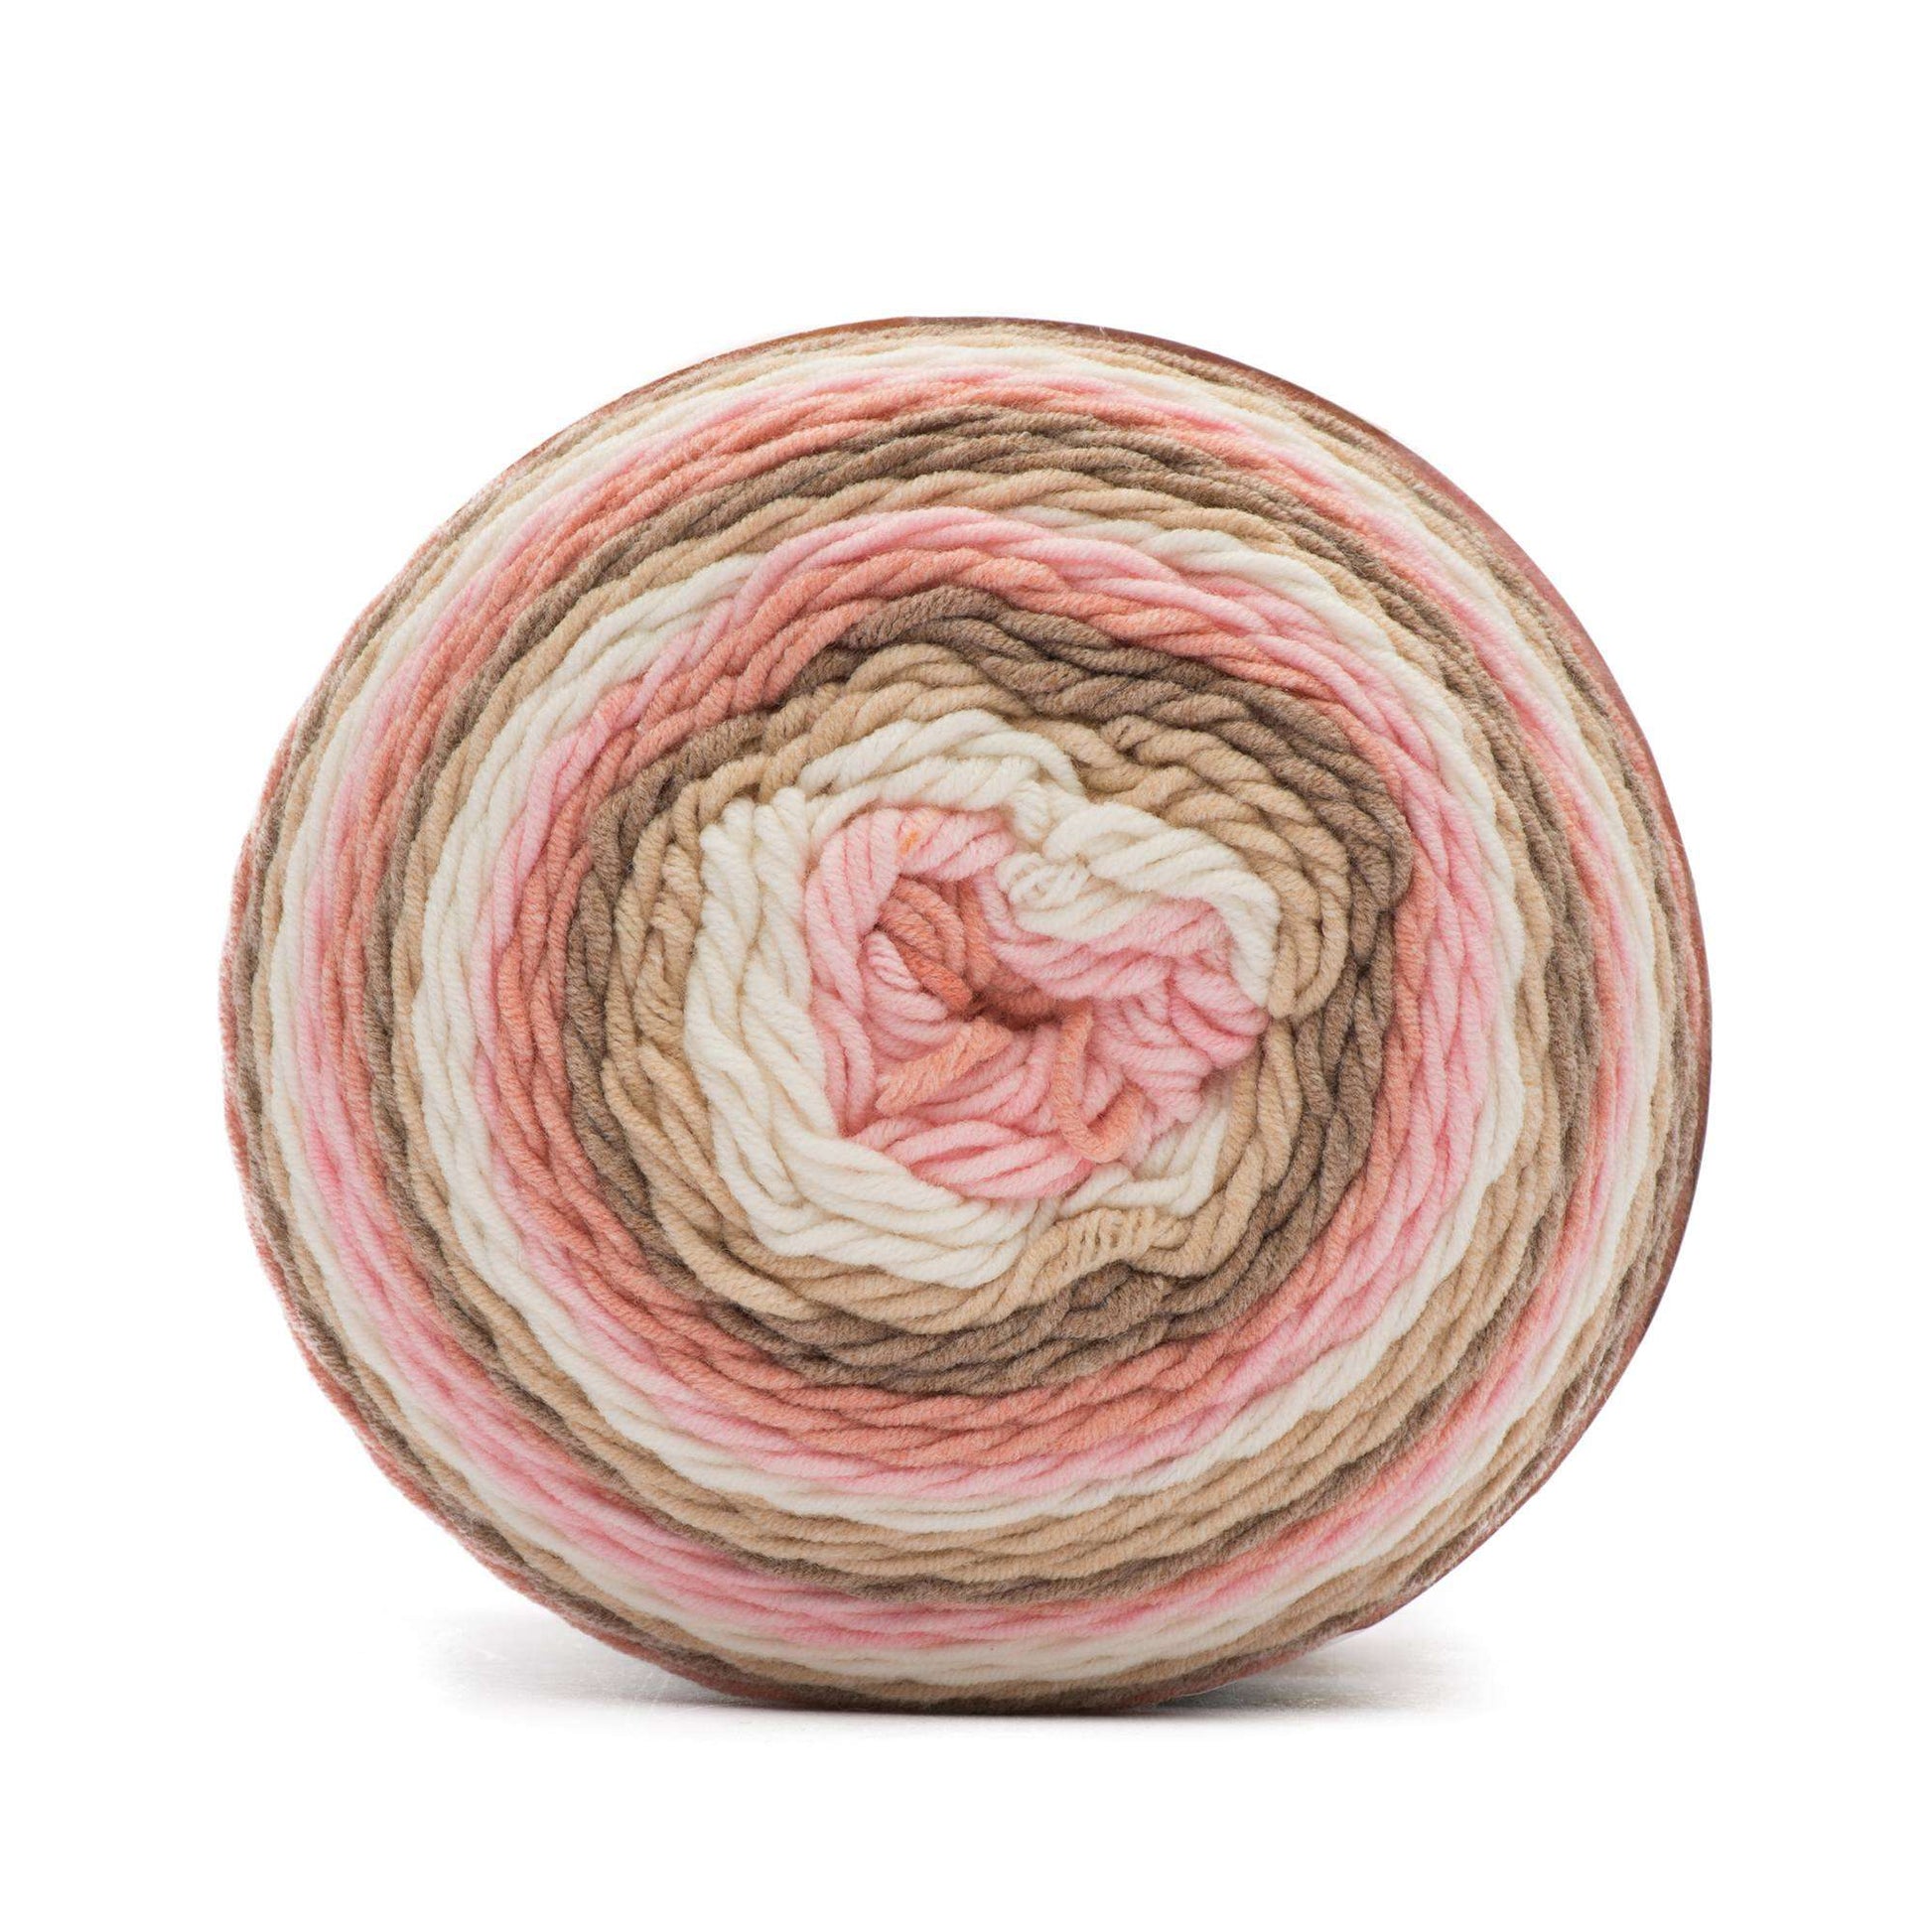 Caron Cotton Lava Cakes Yarn - Clearance Shades